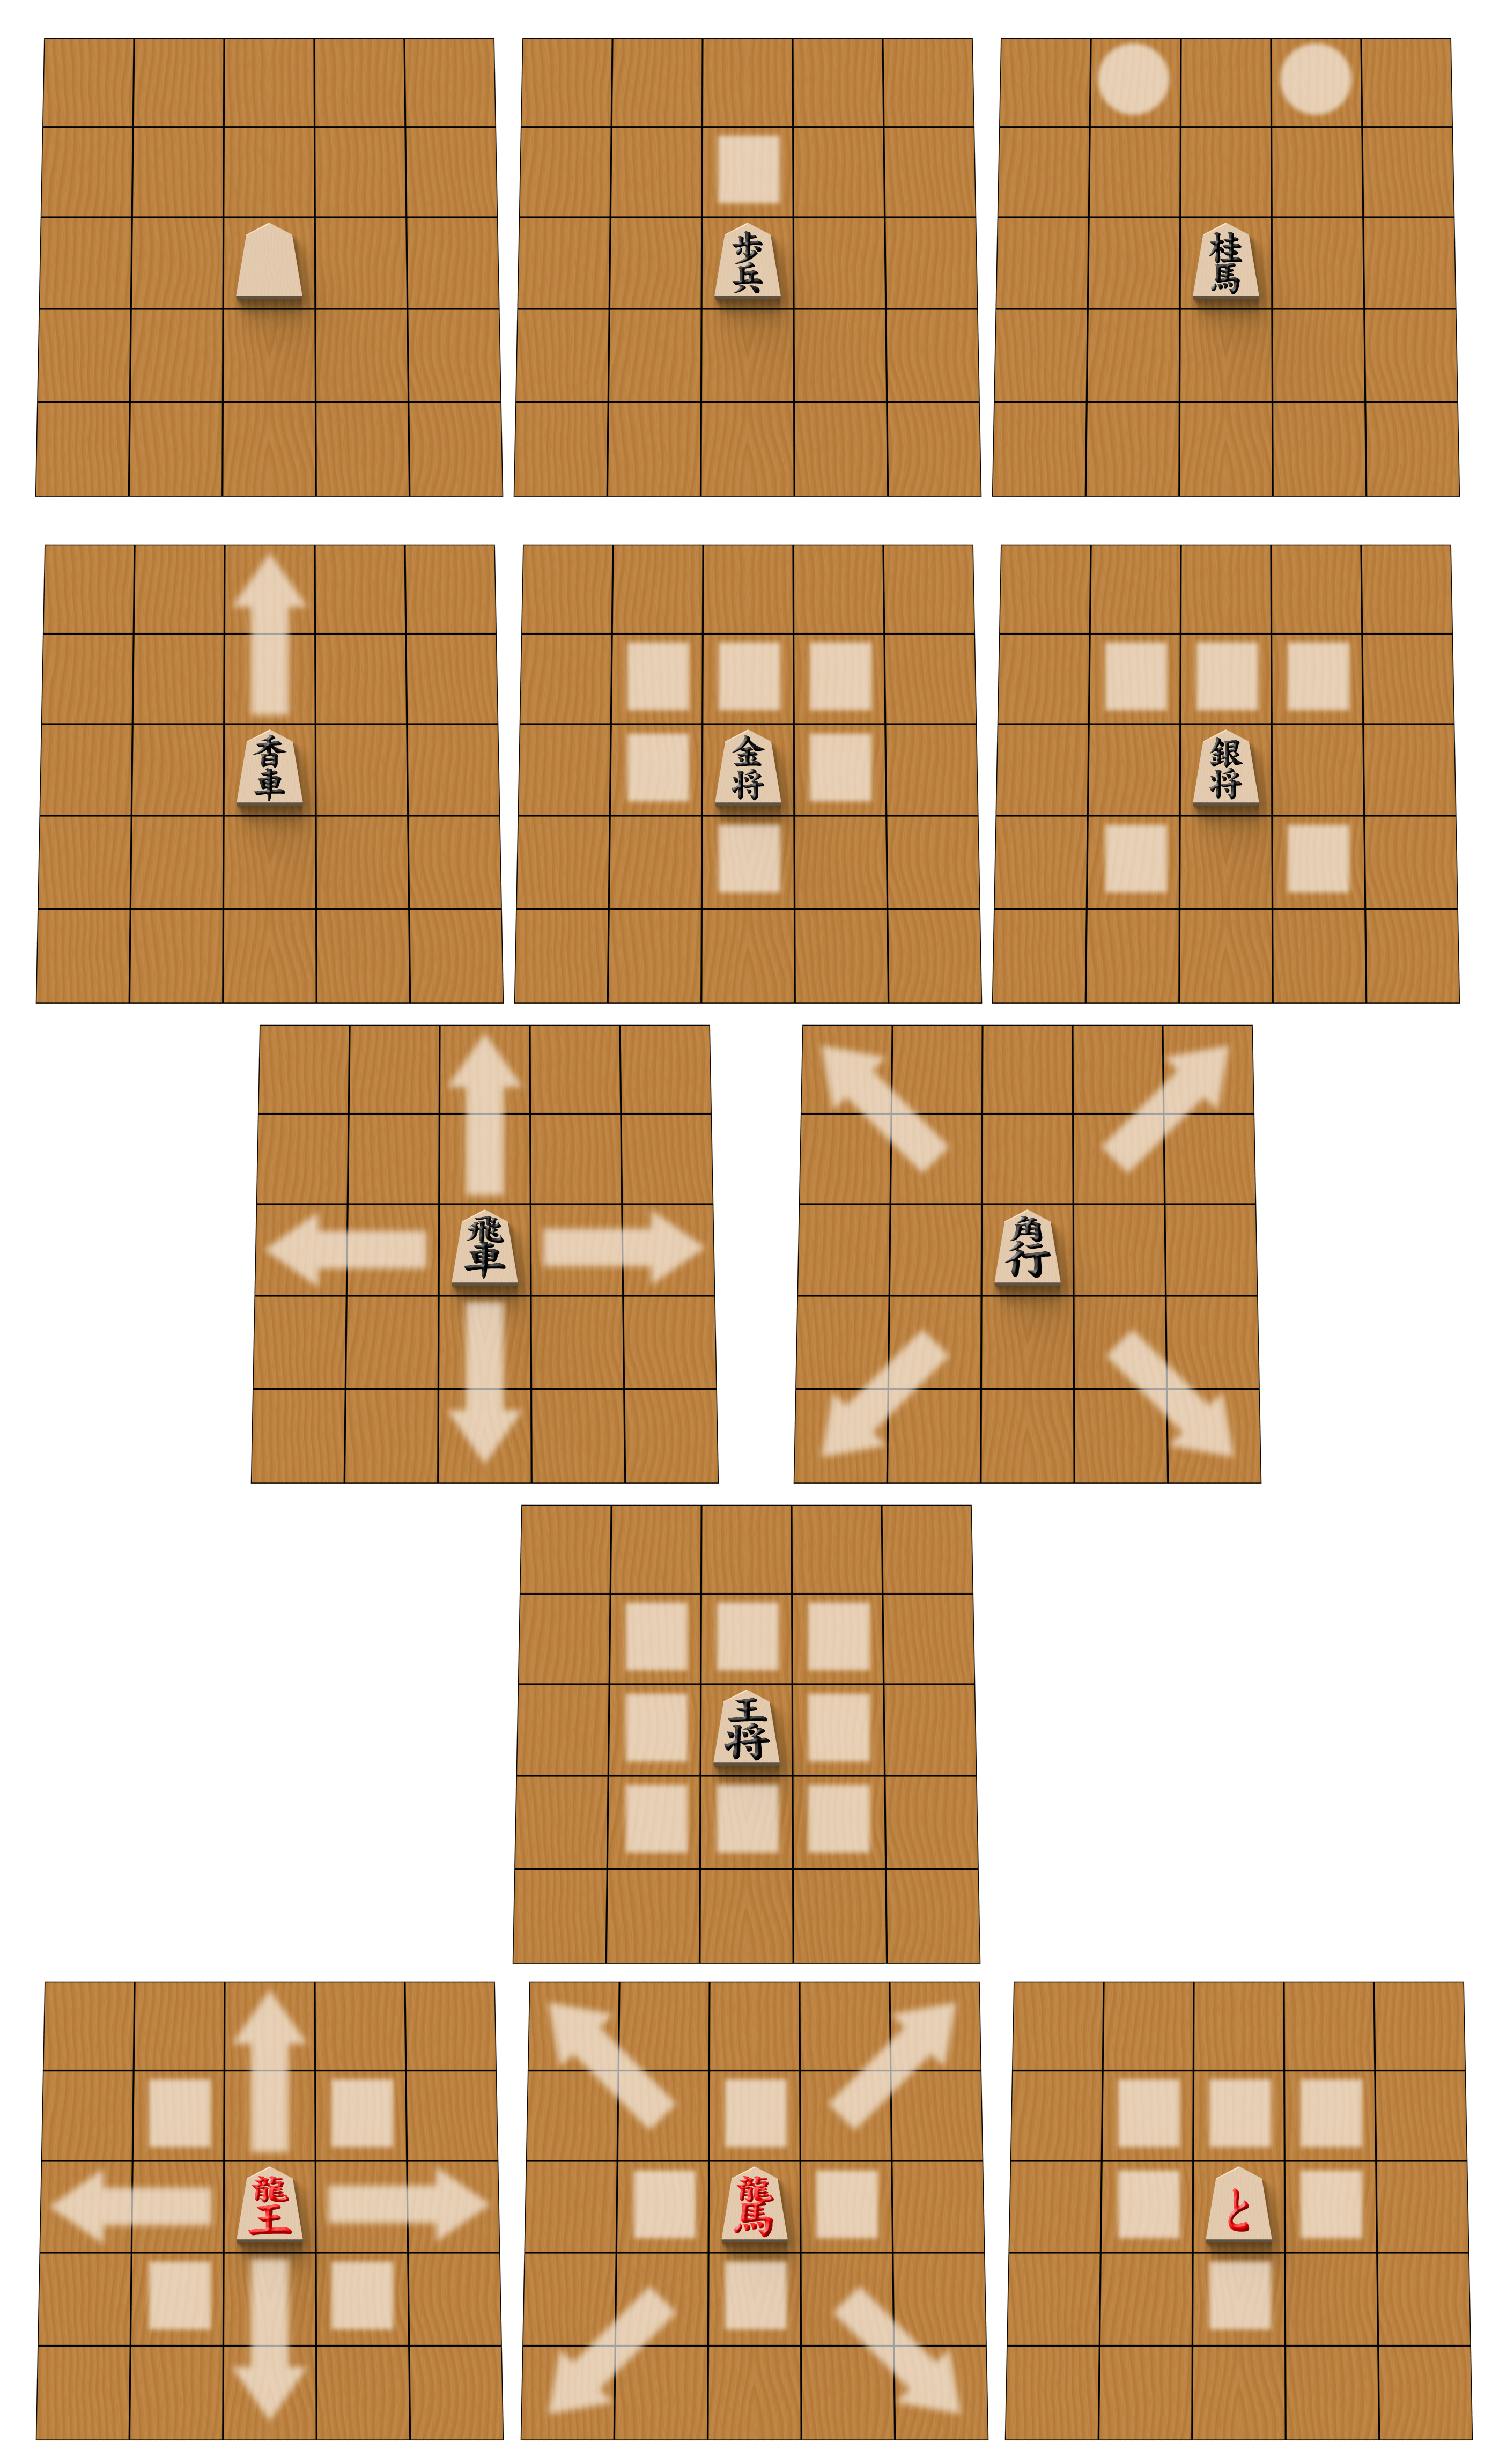 将棋のコマ移動説明用画像 白背景